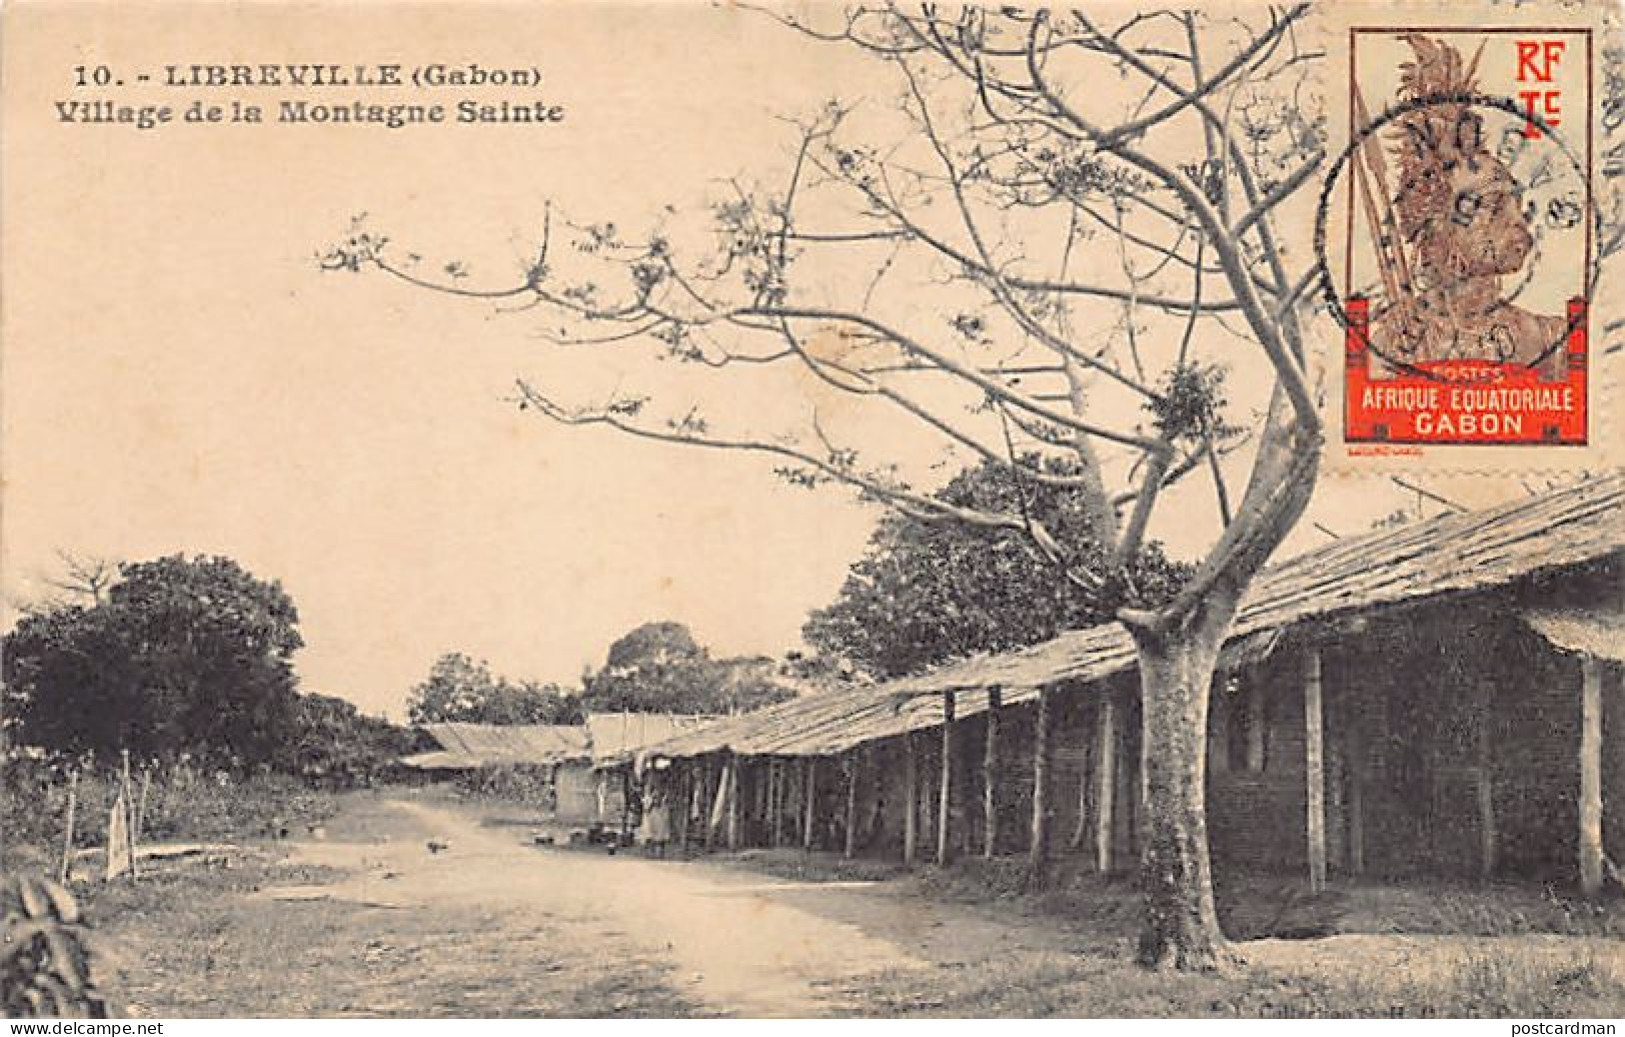 Gabon - LIBREVILLE - Village De La Montagne Sainte - Ed. S.H.O. - G.P. 10 - Gabun